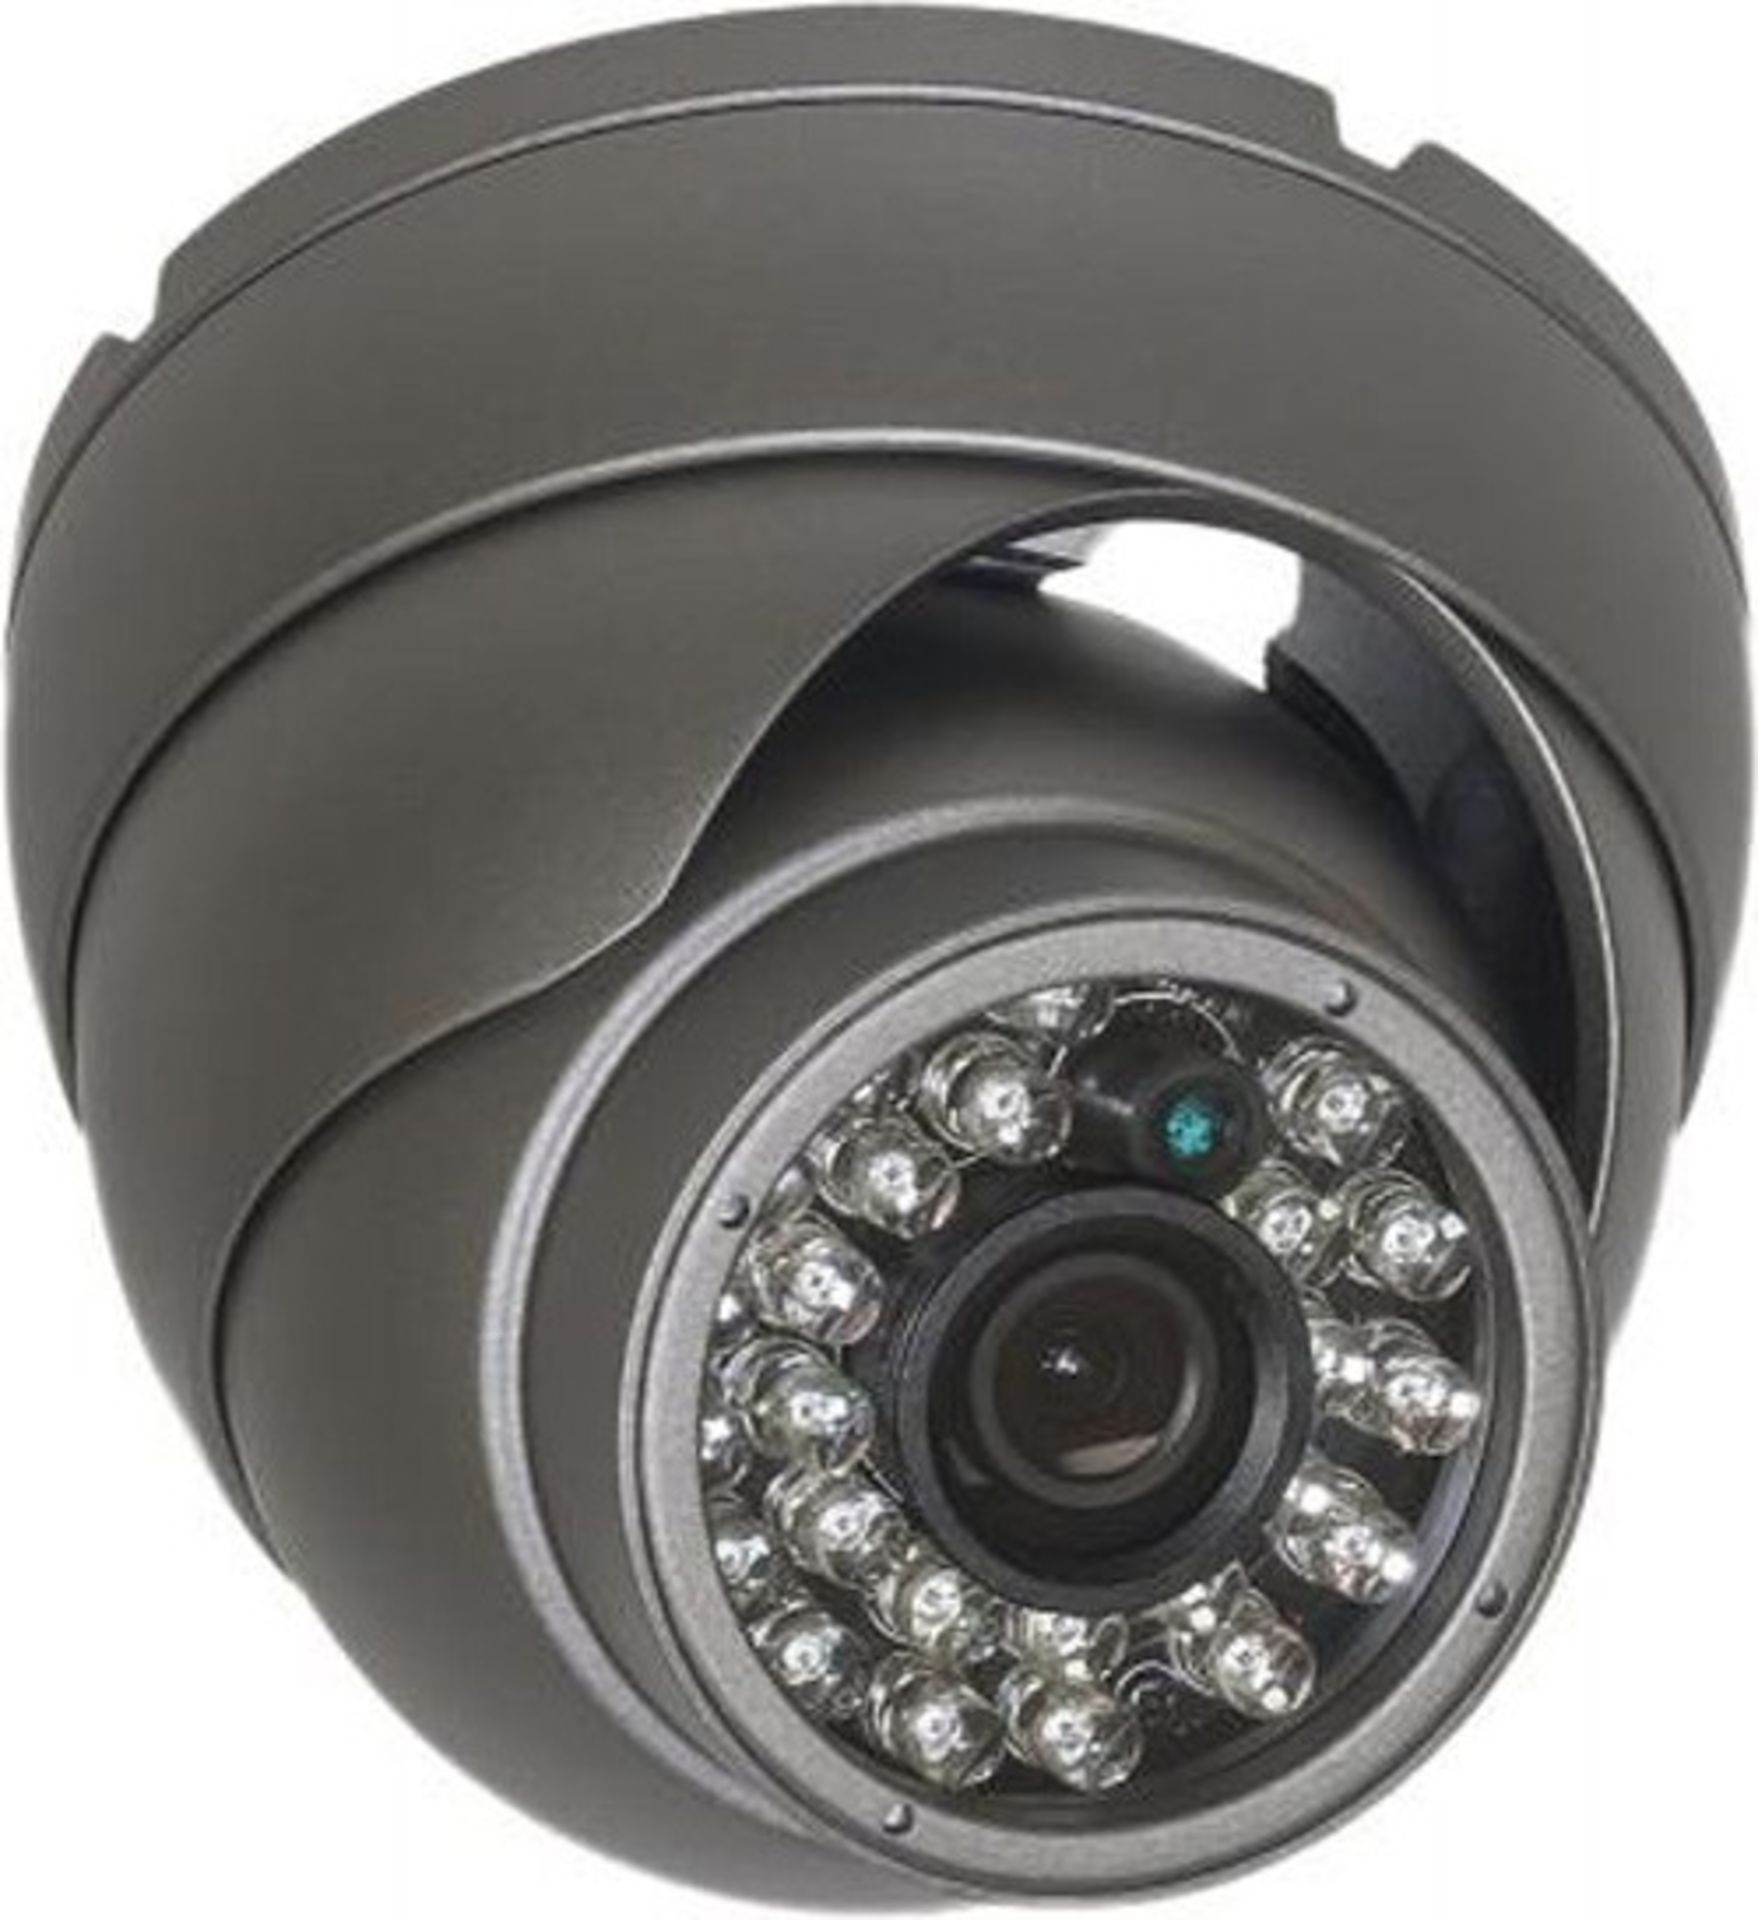 V *TRADE QTY* Brand New Avtech 540 TVL Eyeball IR Dome Camera, 1/3" Sony CCD - IR Range 30m -